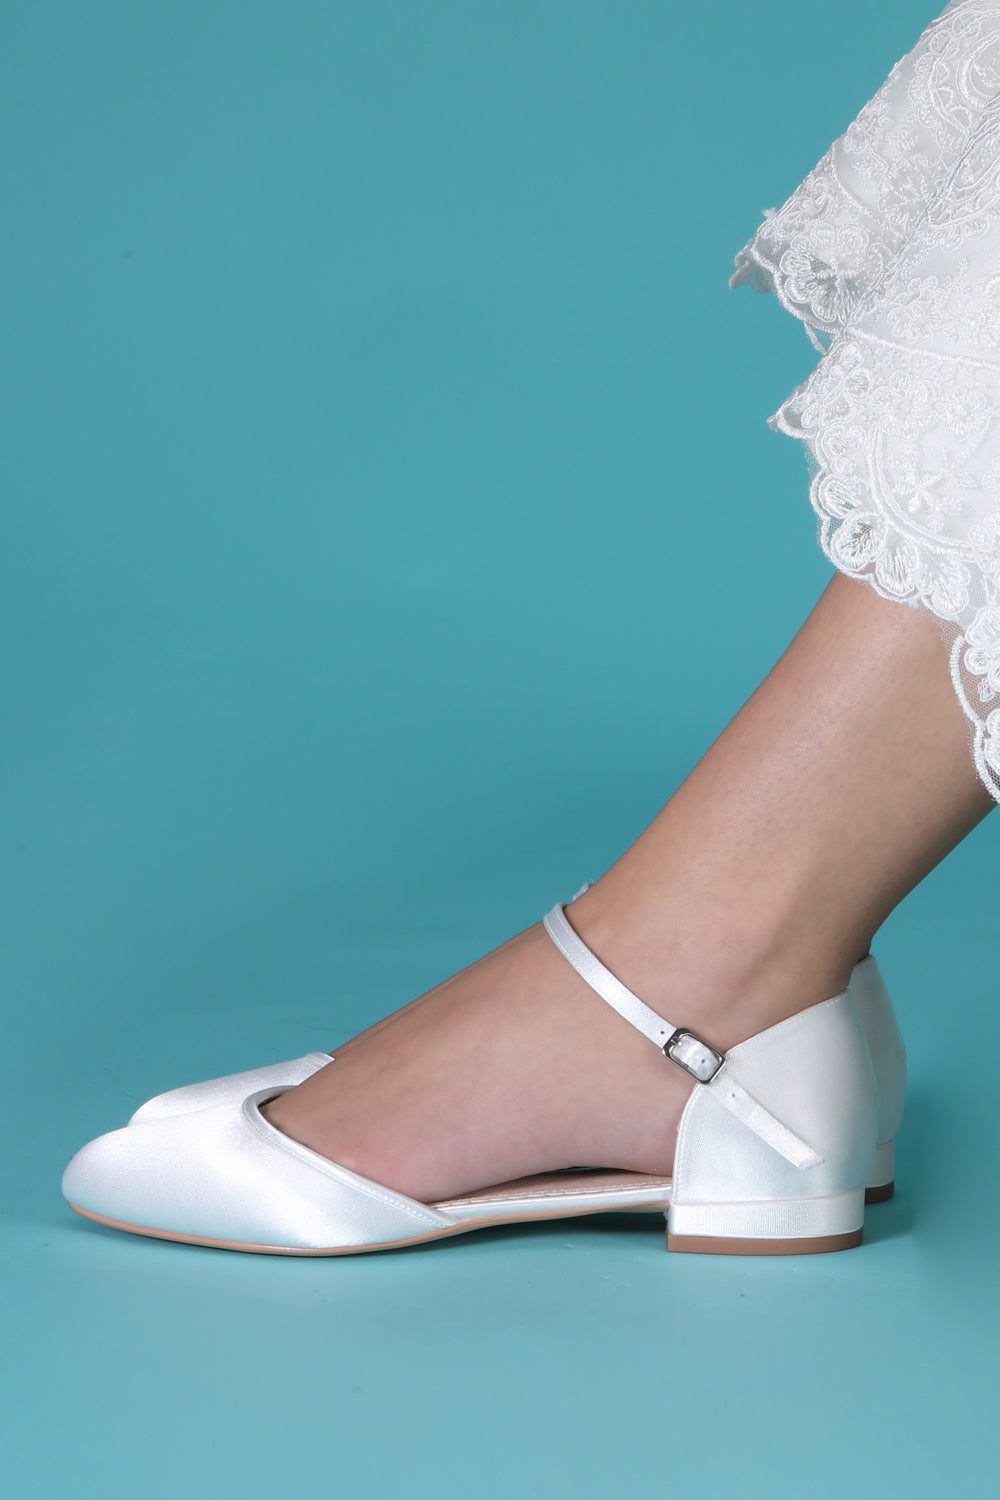 Verity ivory satin flat wedding shoes